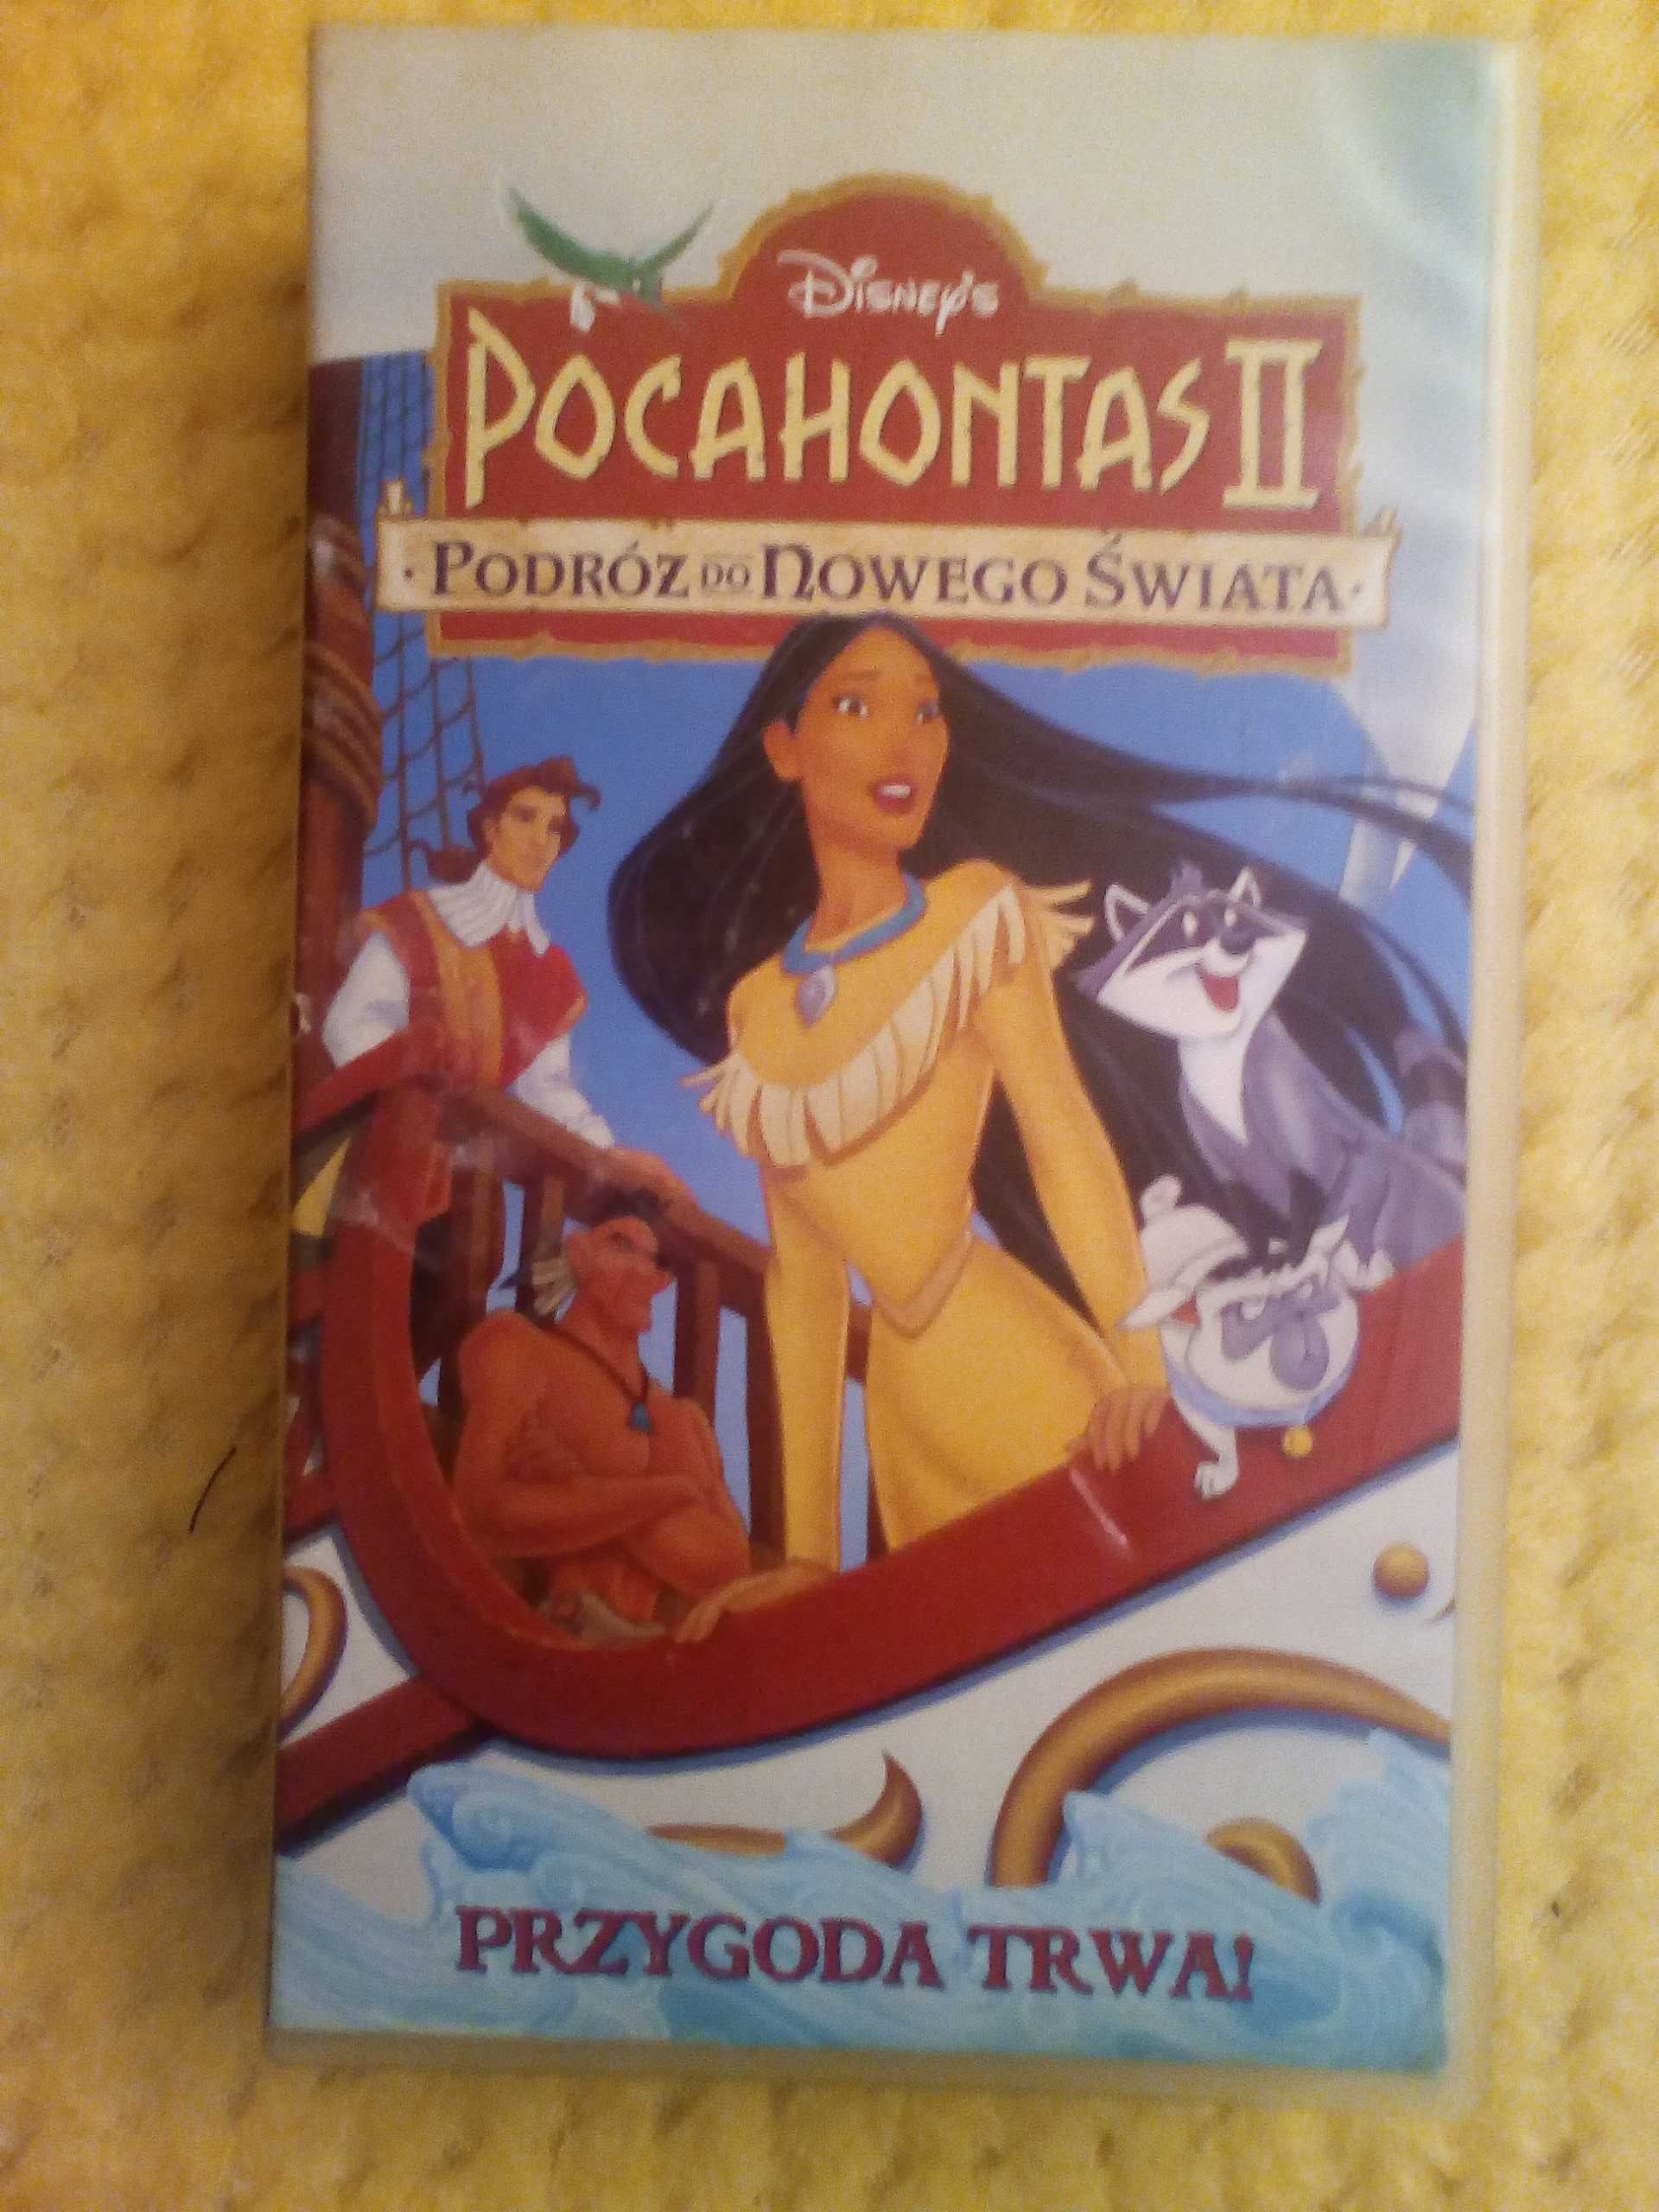 Pocahontas II Podróż do nowego świata-kaseta VHS